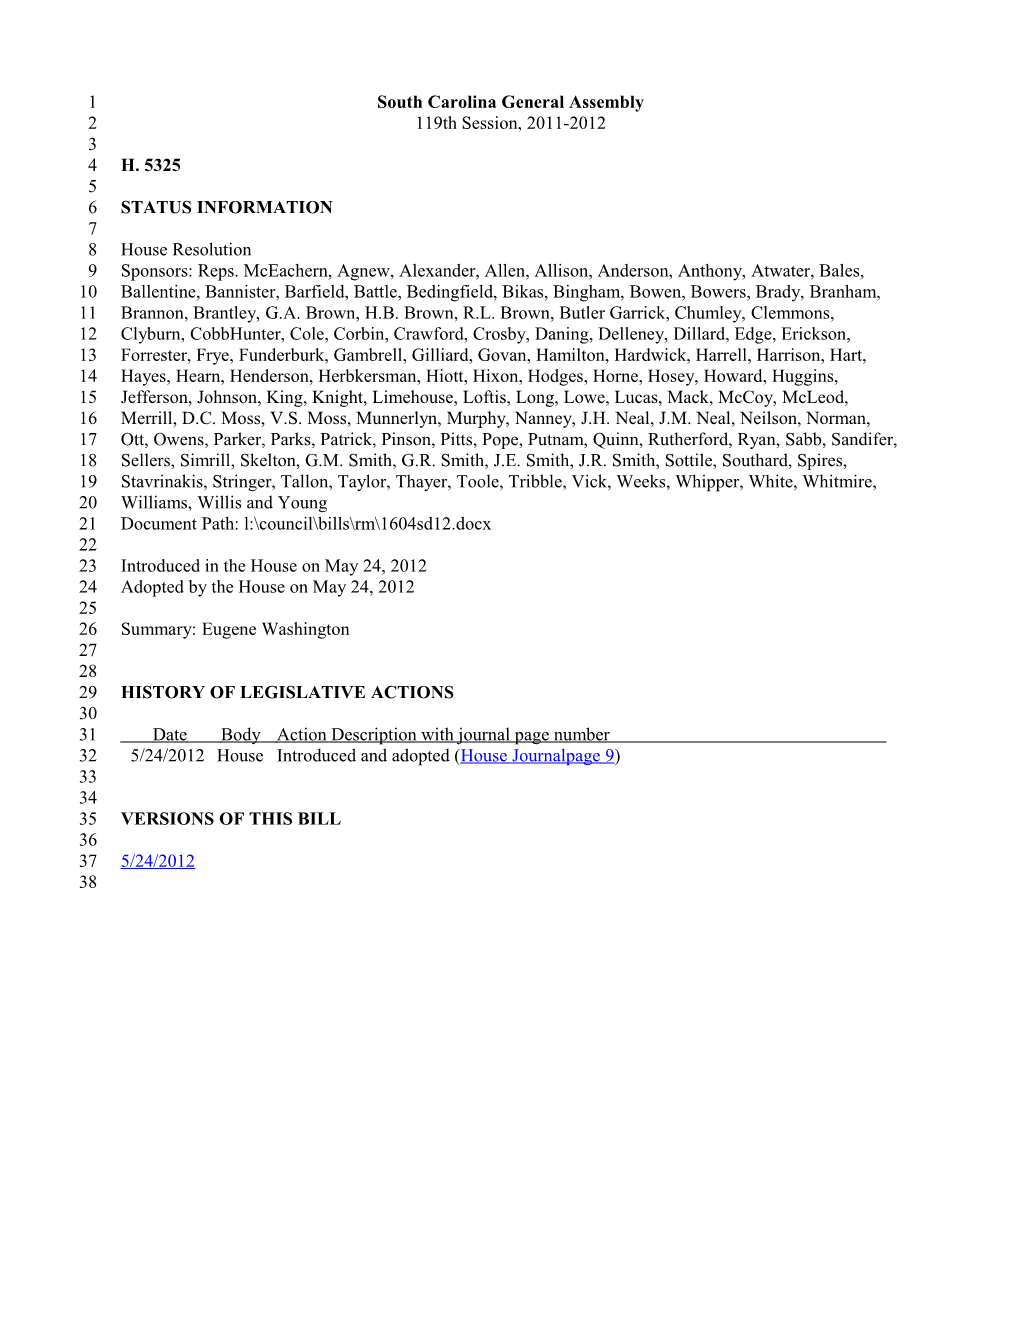 2011-2012 Bill 5325: Eugene Washington - South Carolina Legislature Online